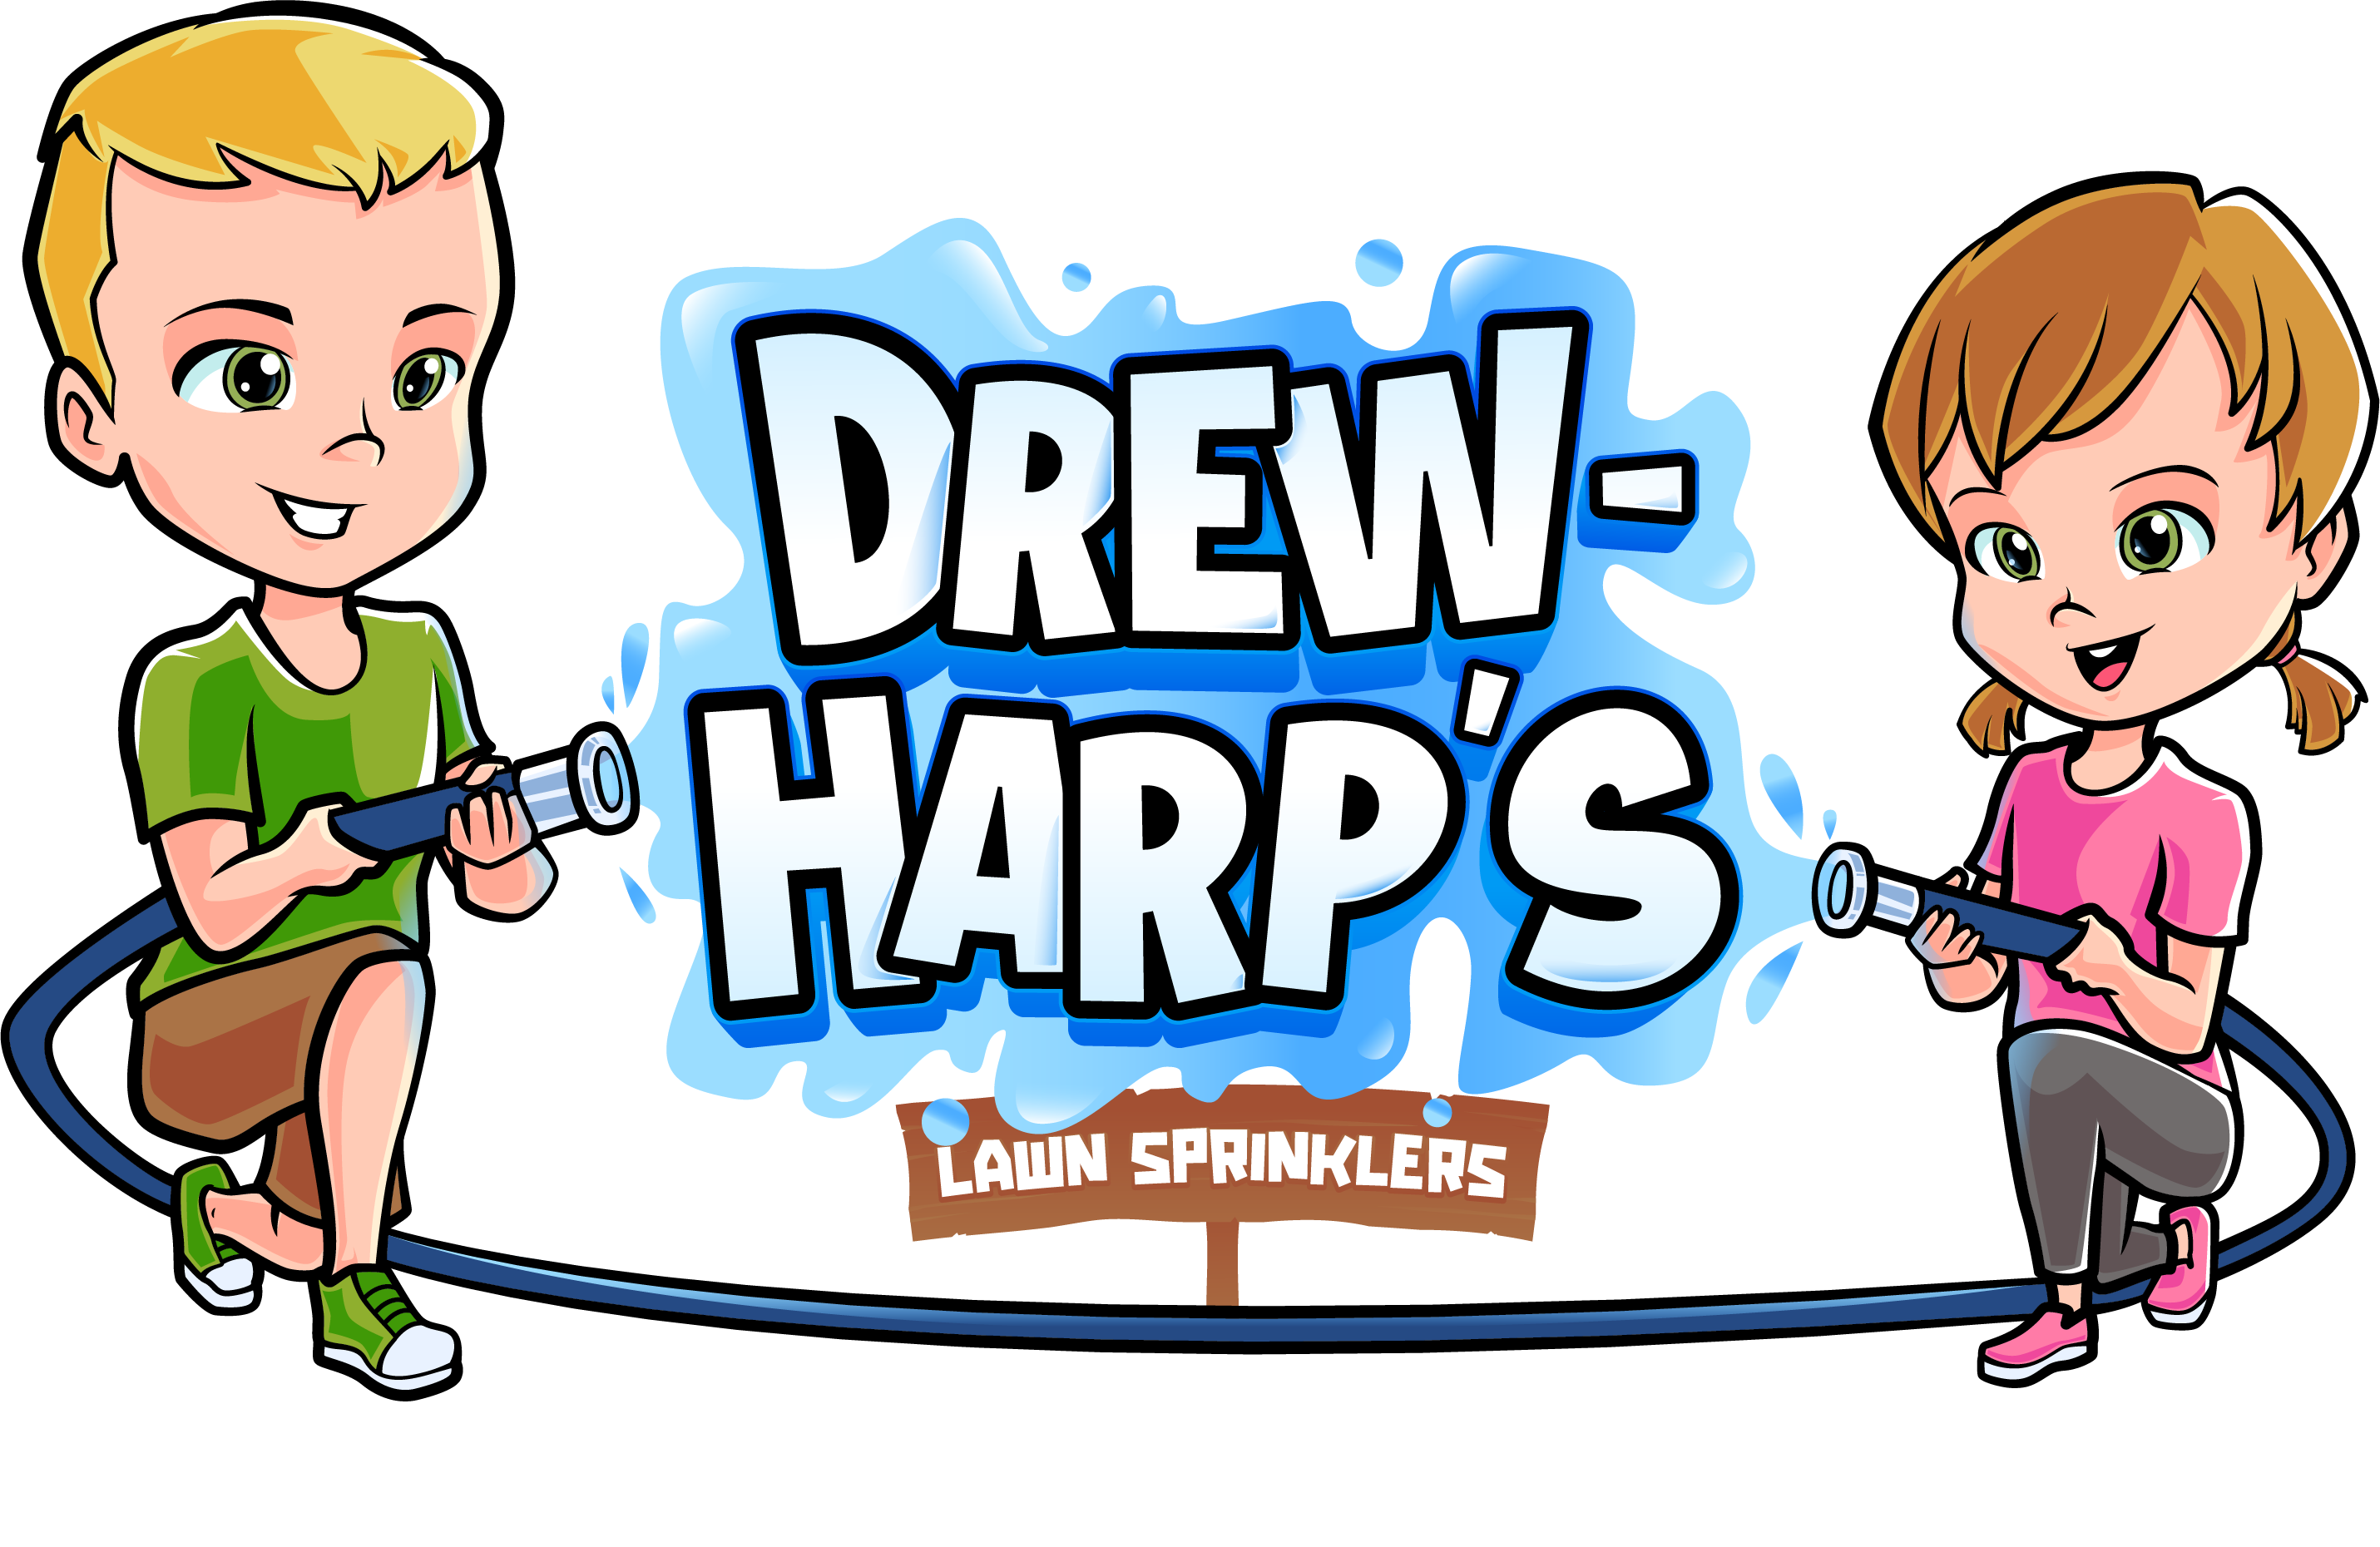 Drew Harps Lawn Sprinklers Logo